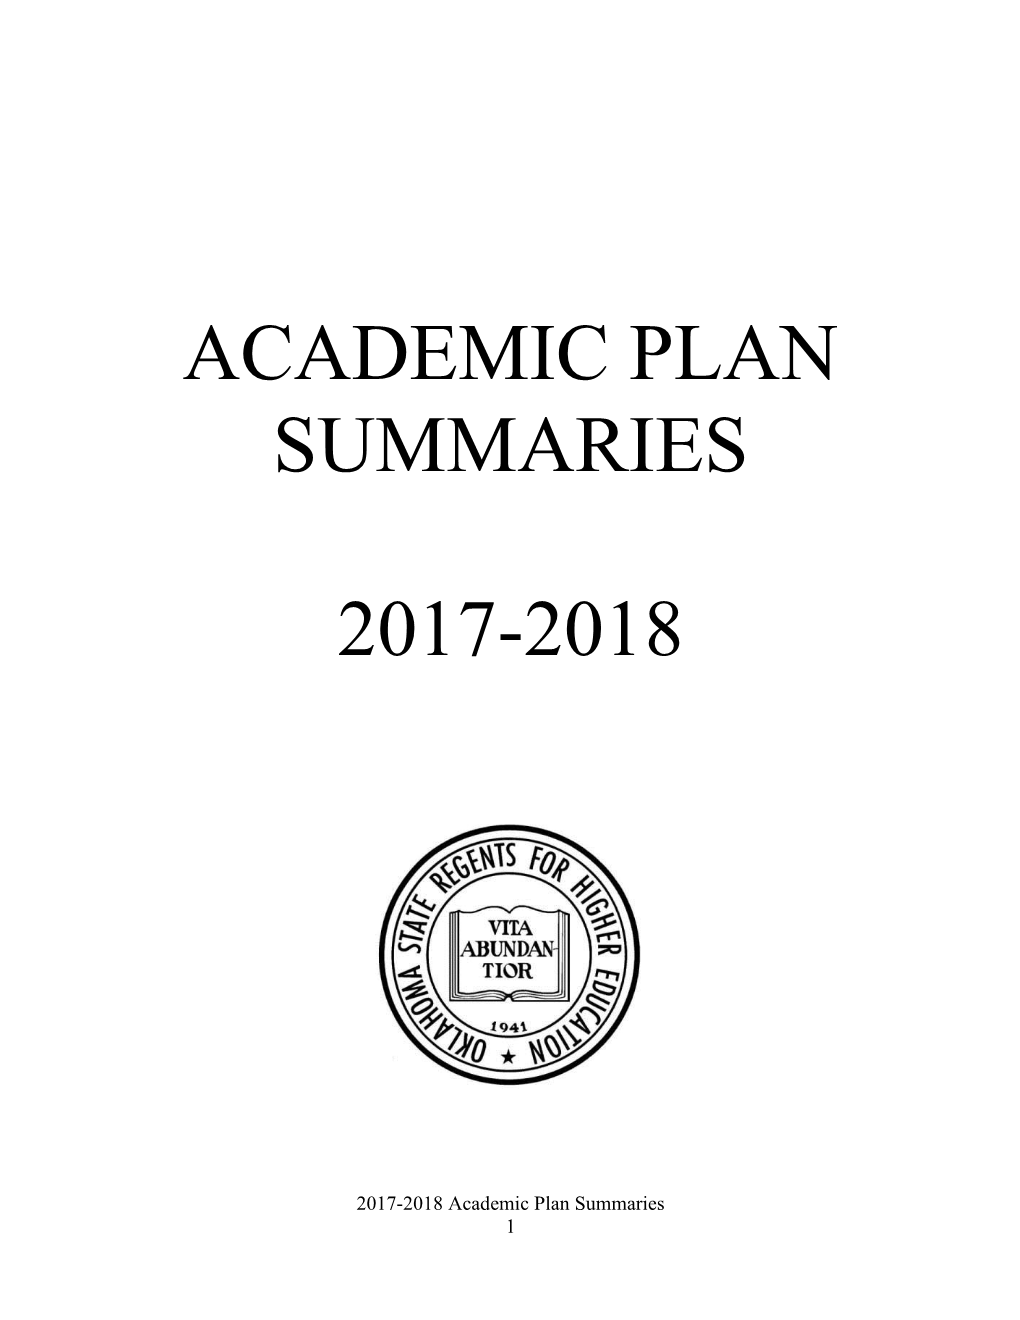 Academic Plan Summaries 2017-2018